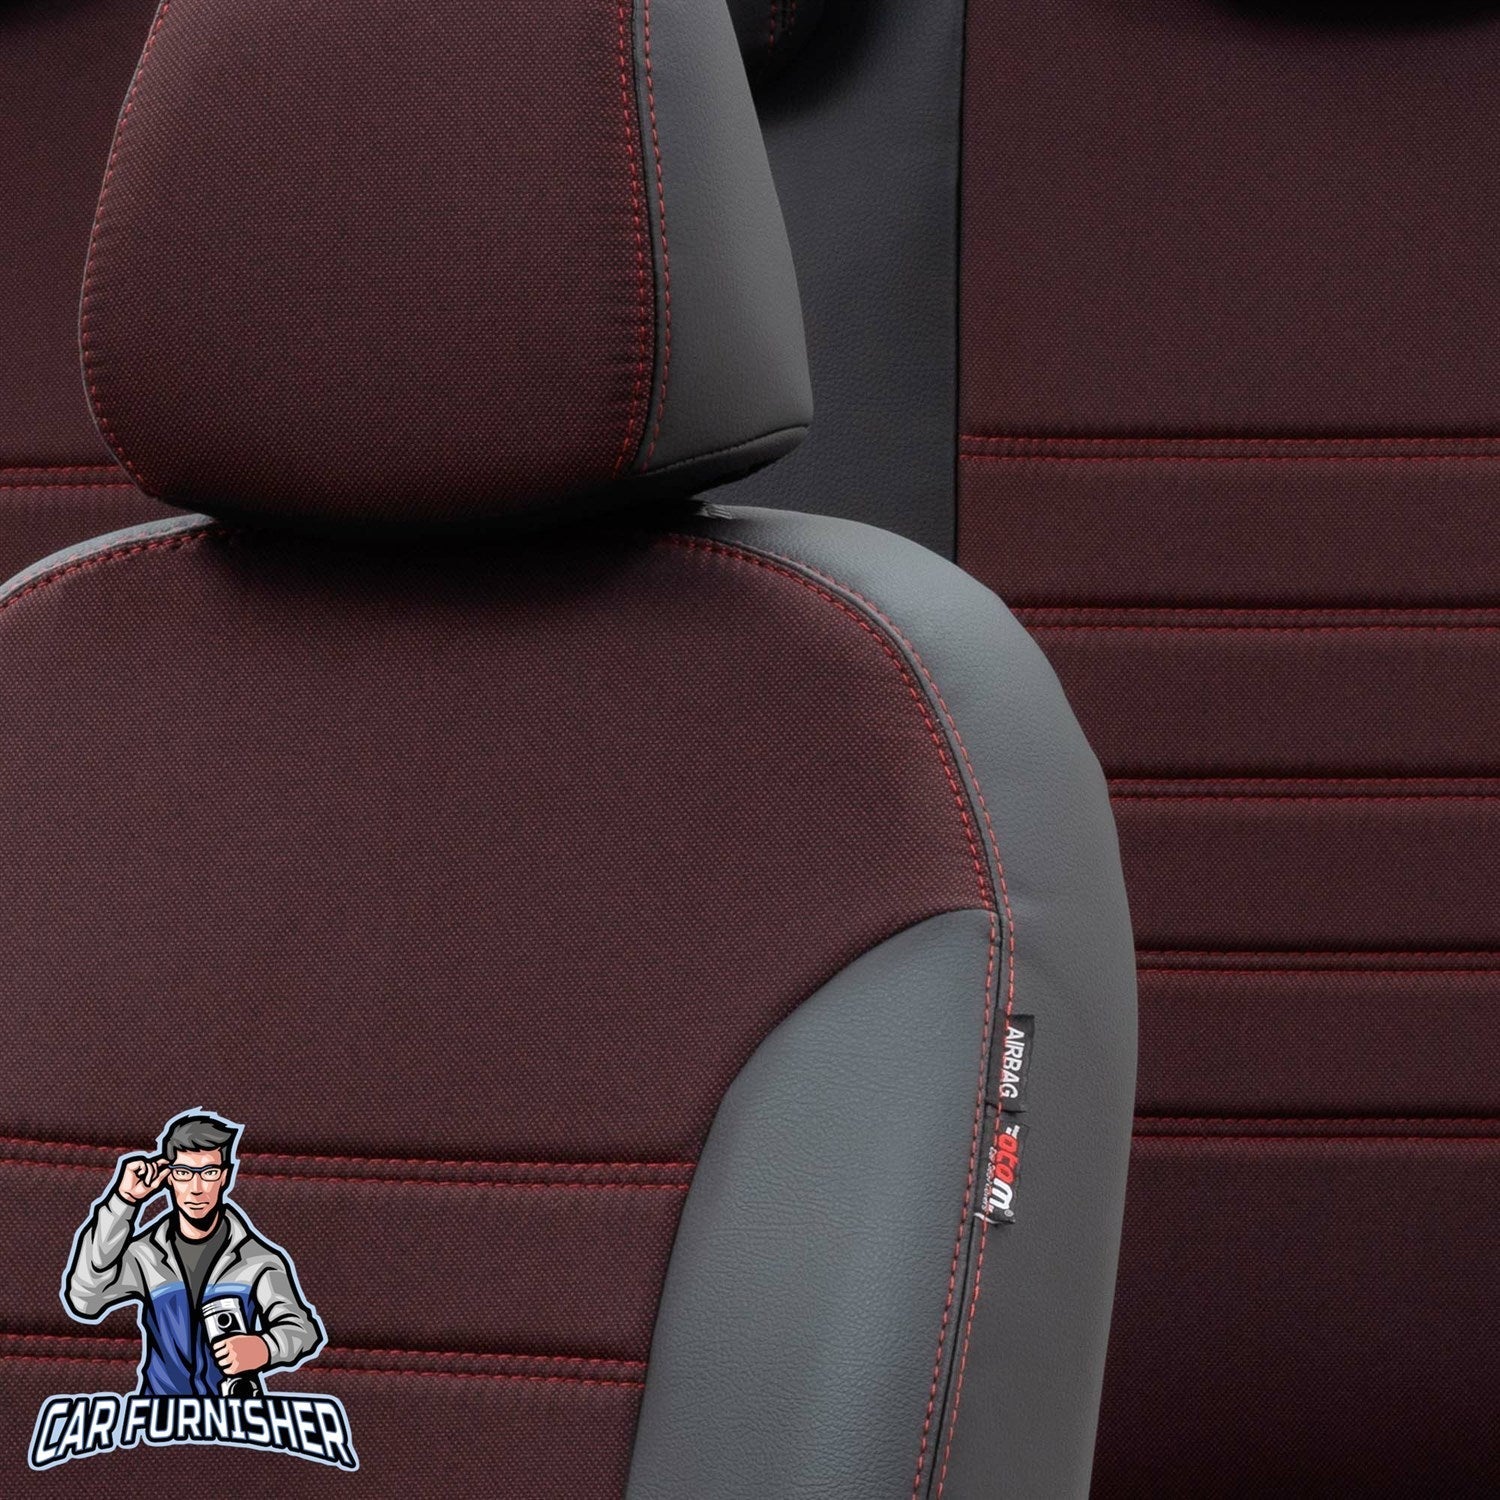 Alfa Romeo Giulietta Seat Cover Paris Leather & Jacquard Design Red Leather & Jacquard Fabric